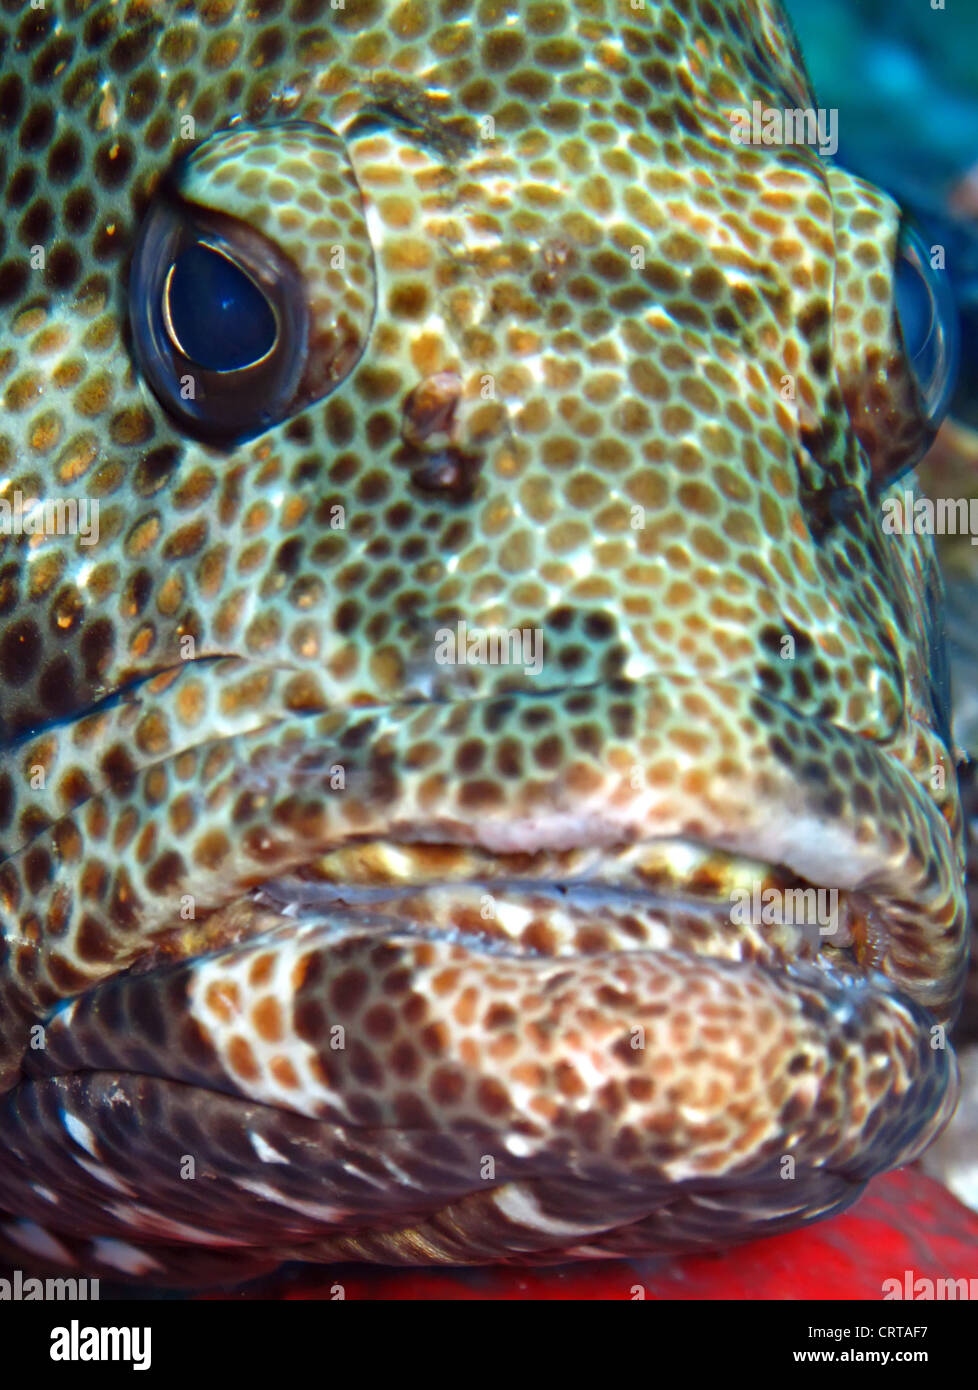 Marble Grouper (Epinephelus microdon). Taken at Ras Mohamed in Red Sea, Egypt. Stock Photo